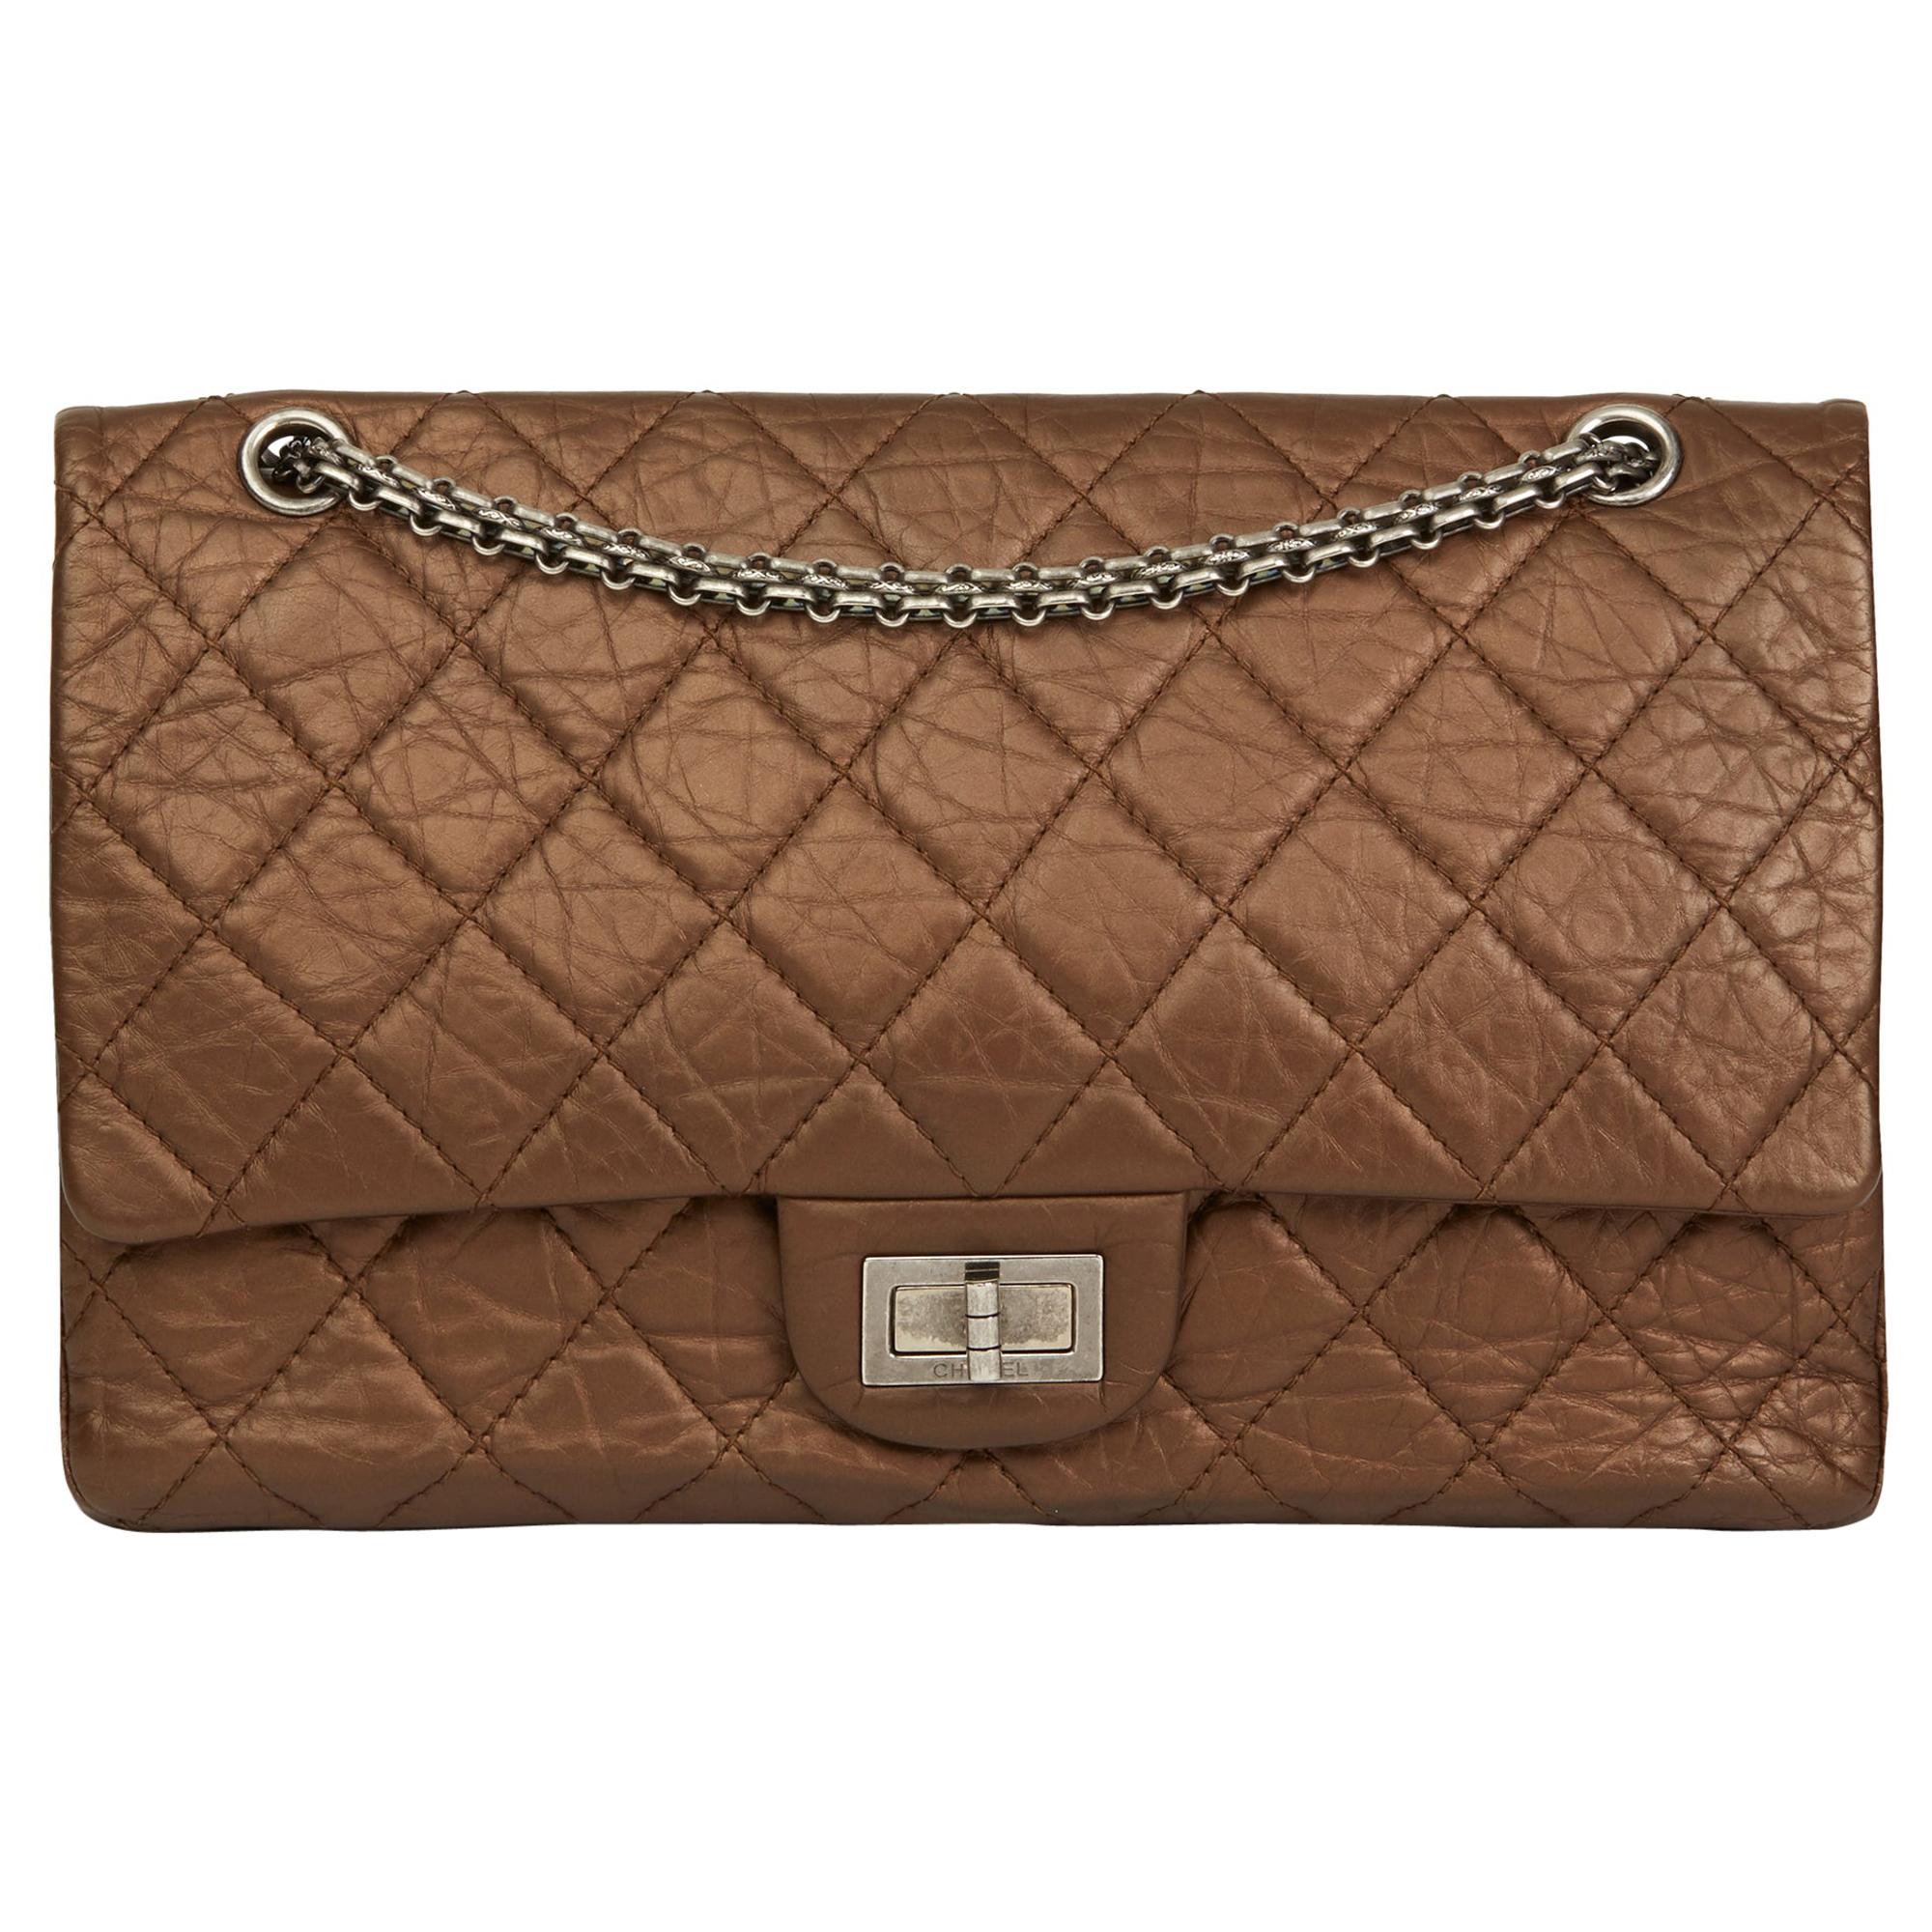 2009 Chanel Dark Bronze Metallic Aged Leather 2.55 Reissue 227 Double Flap Bag 